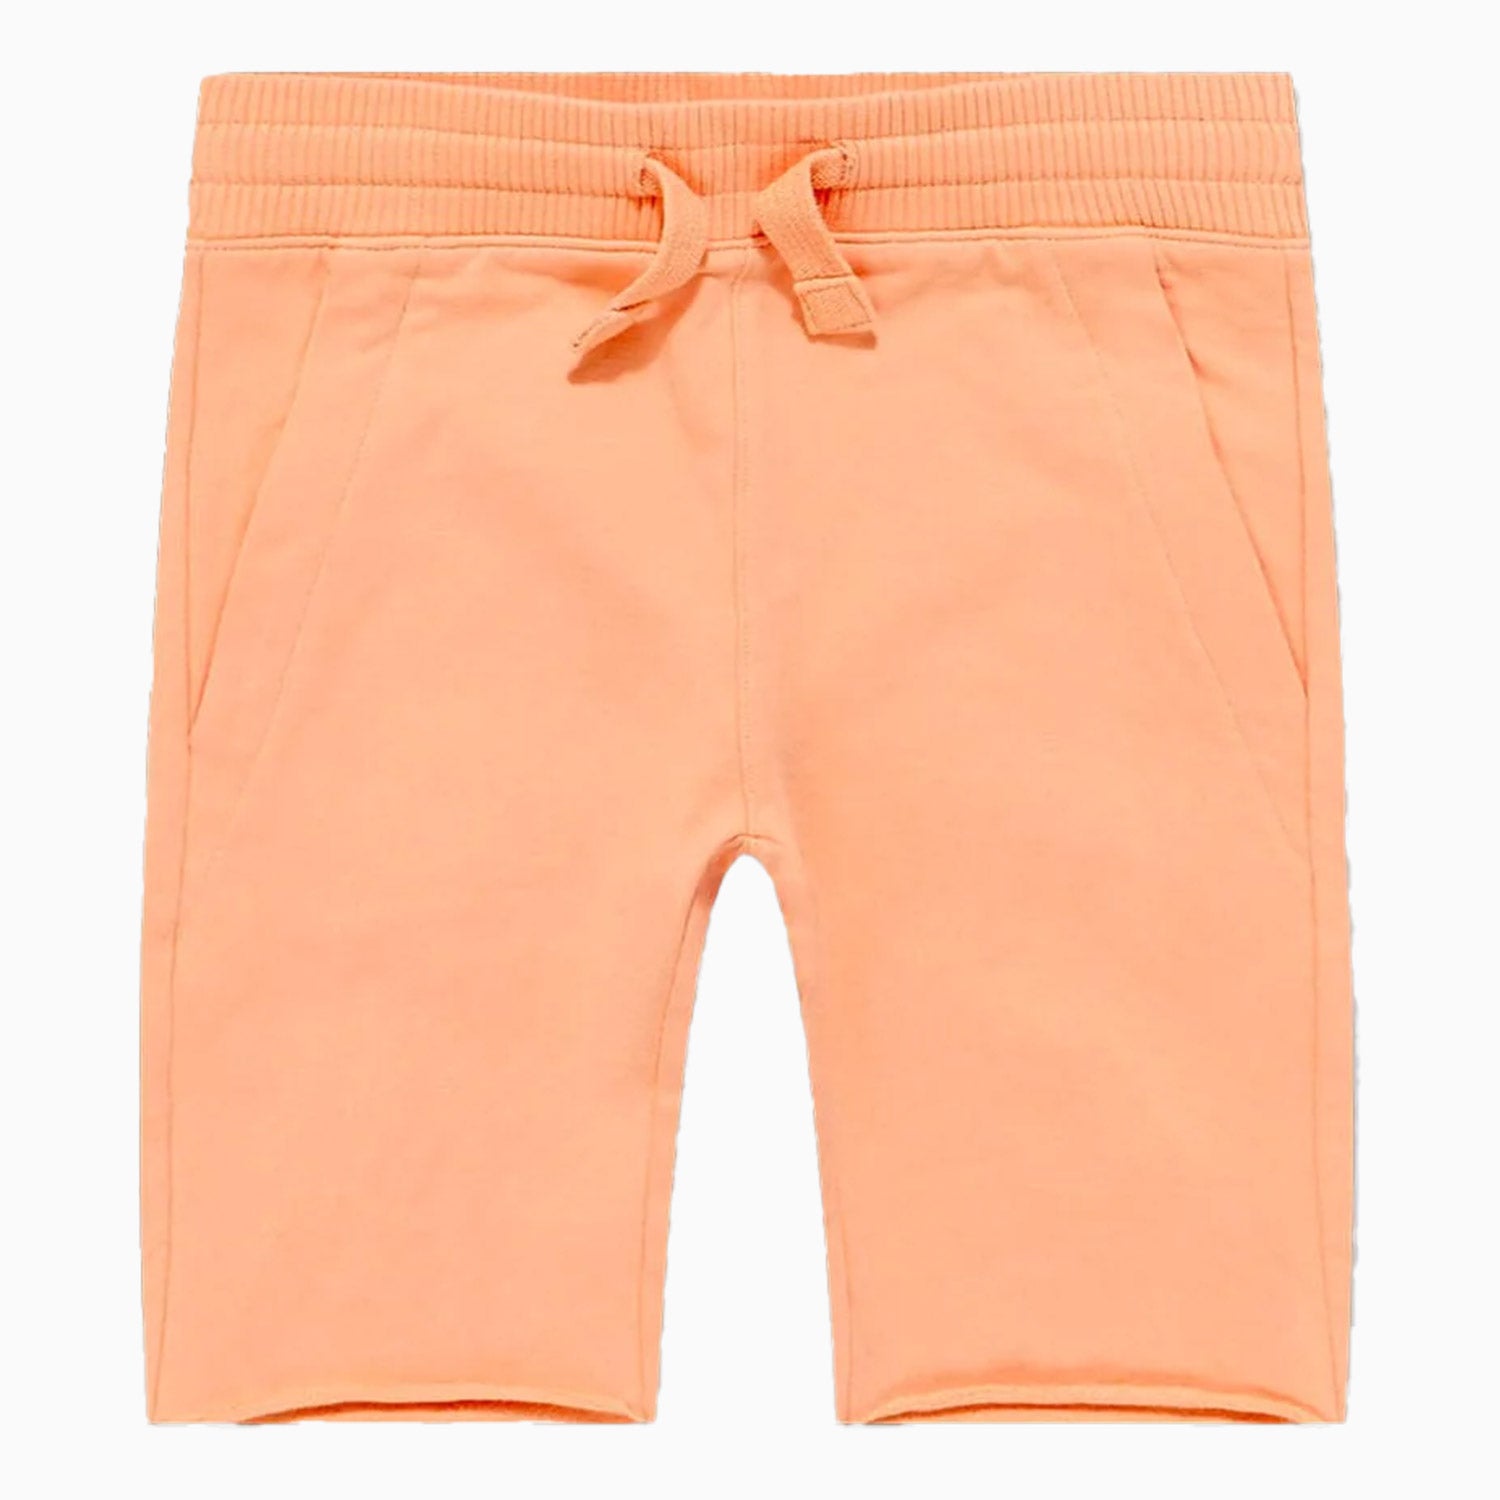 jordan-craig-kids-palma-french-terry-shorts-8450sk-peach